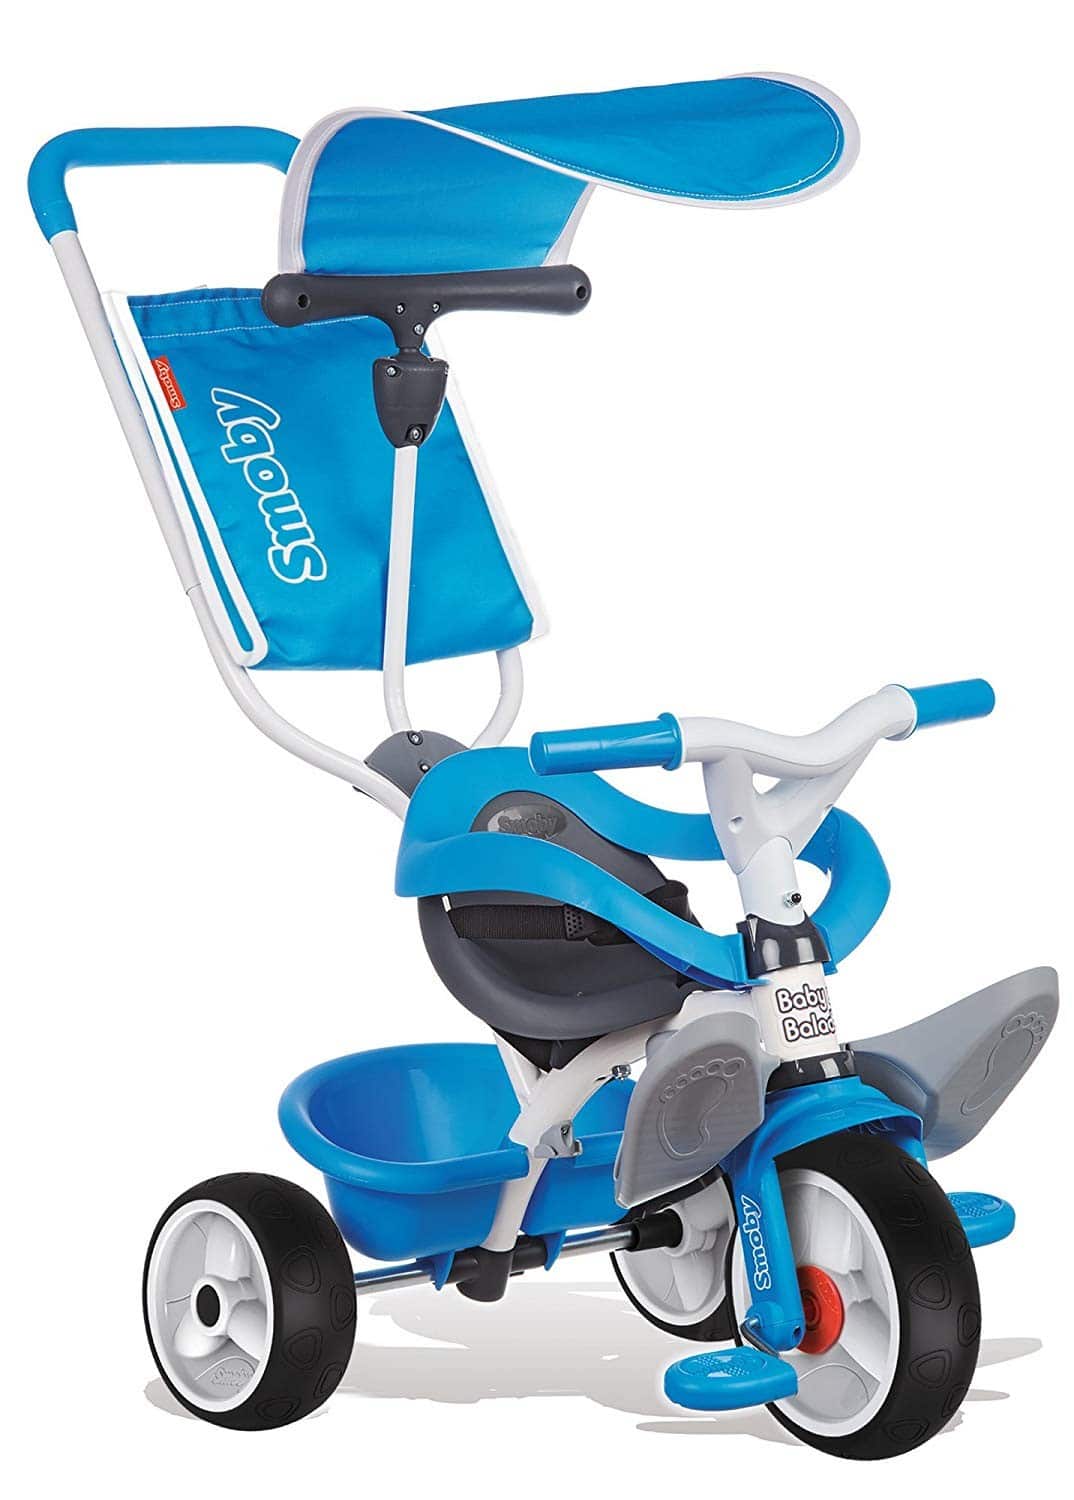 Triciclo Baby Balade